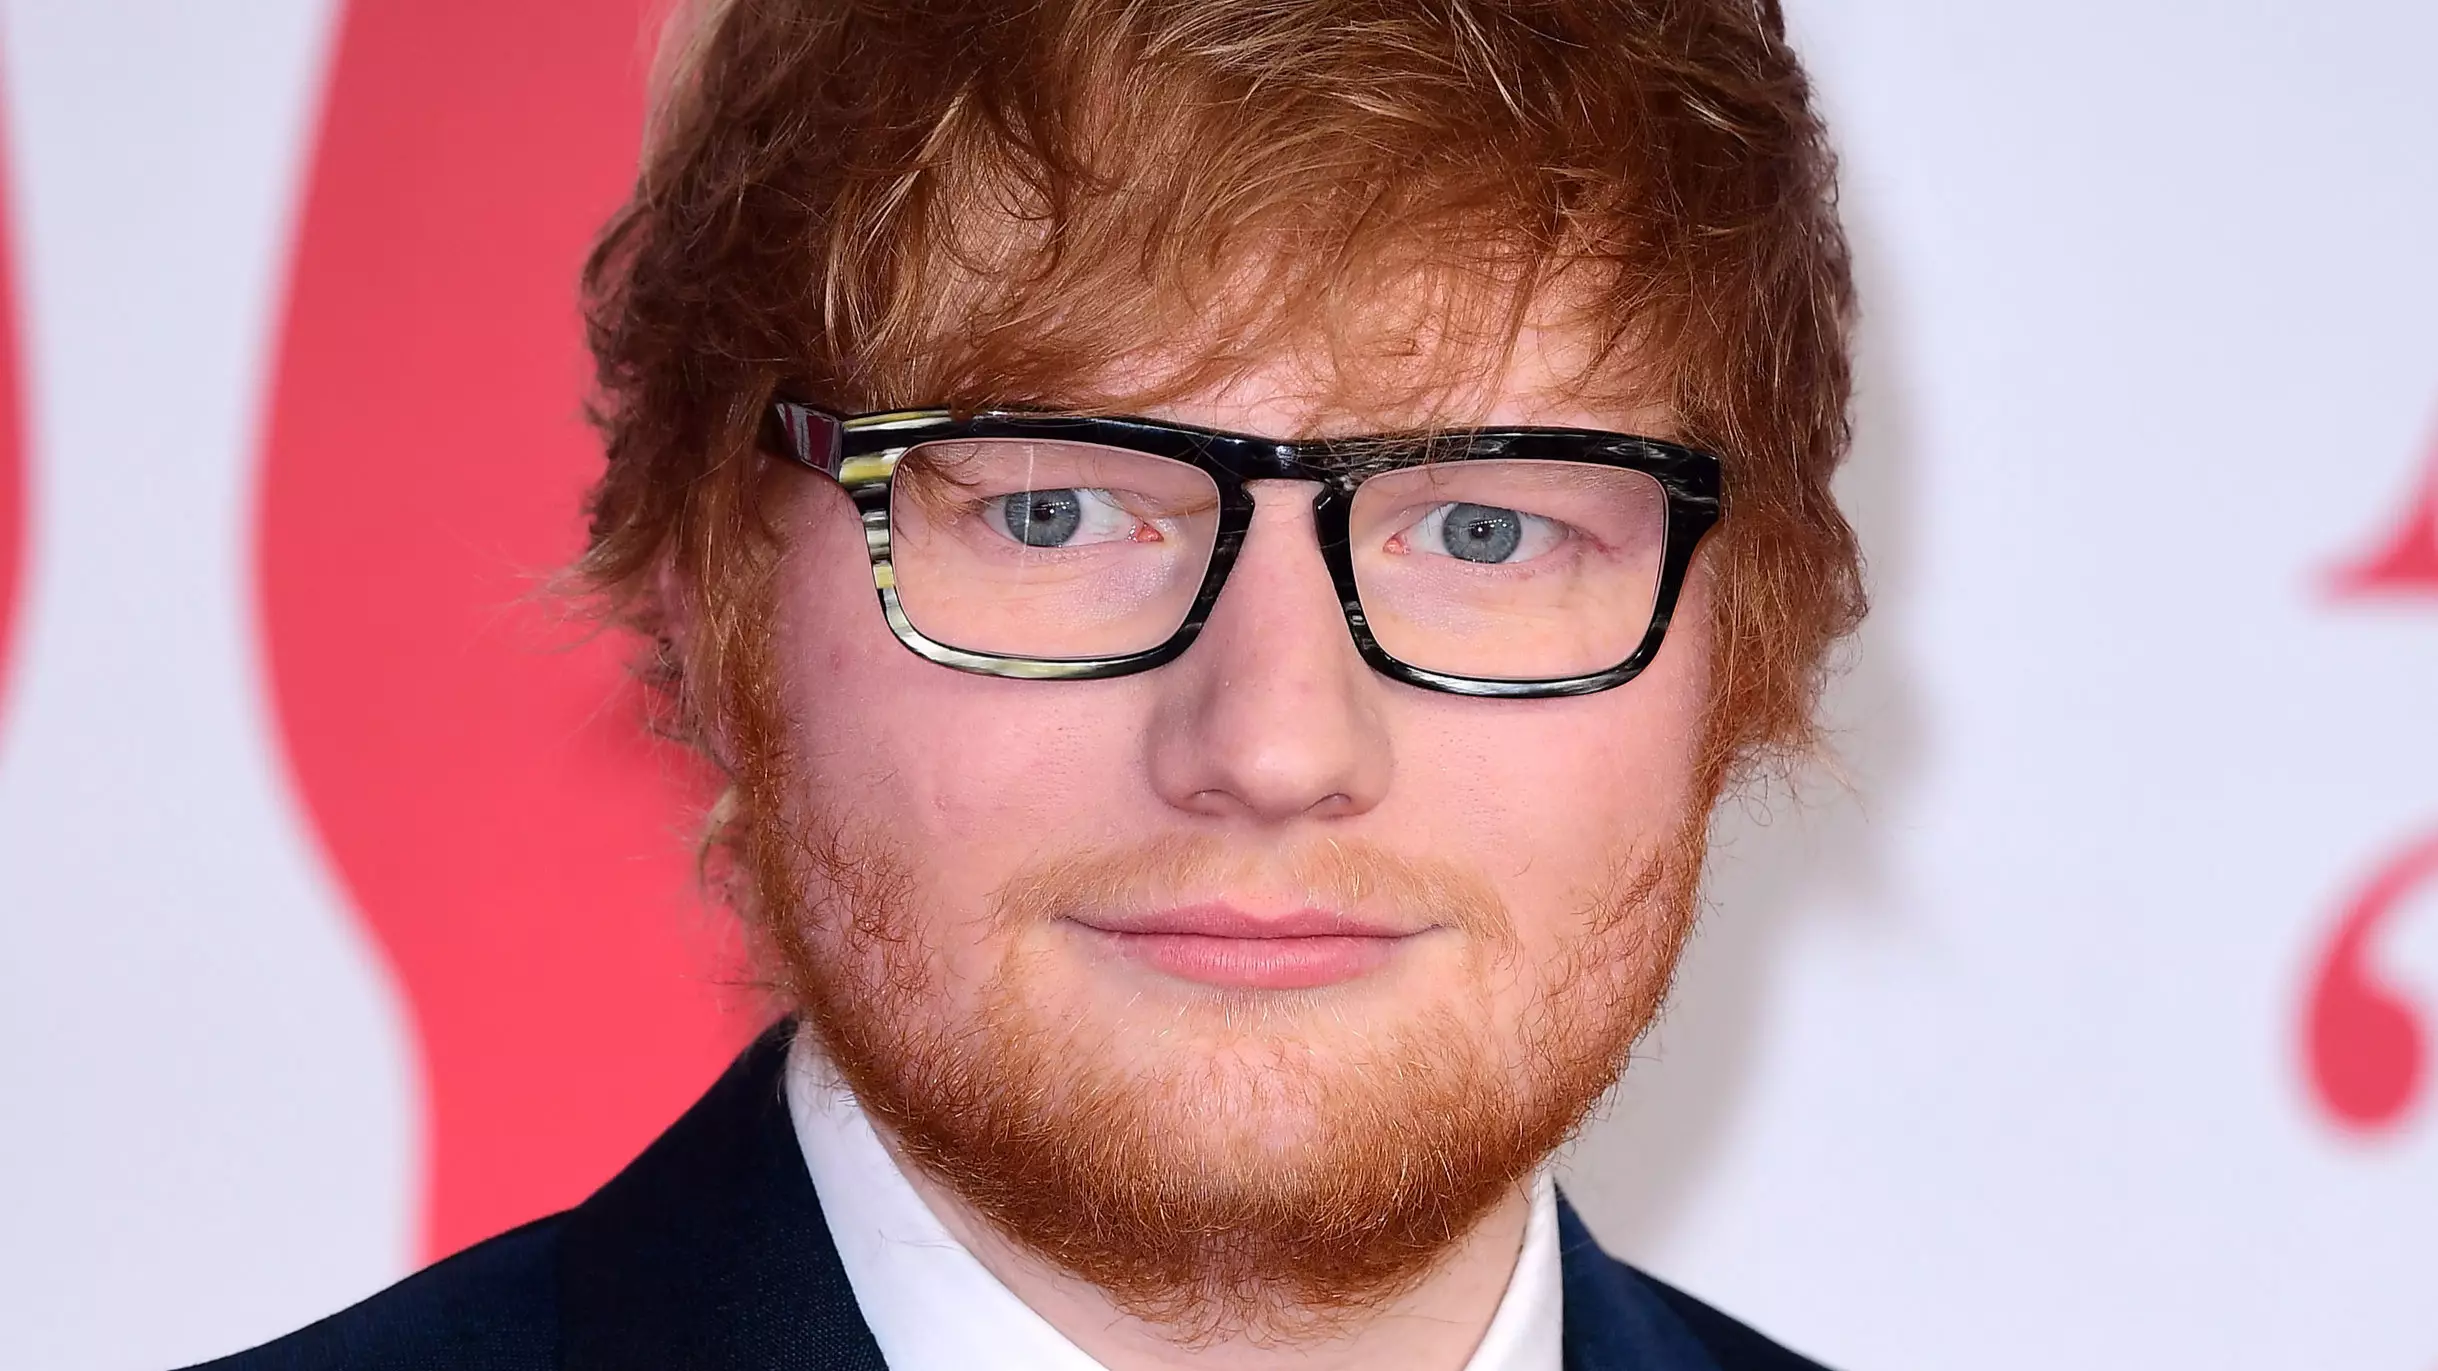 What Happened To The Street Kids Ed Sheeran Met At Comic Relief?